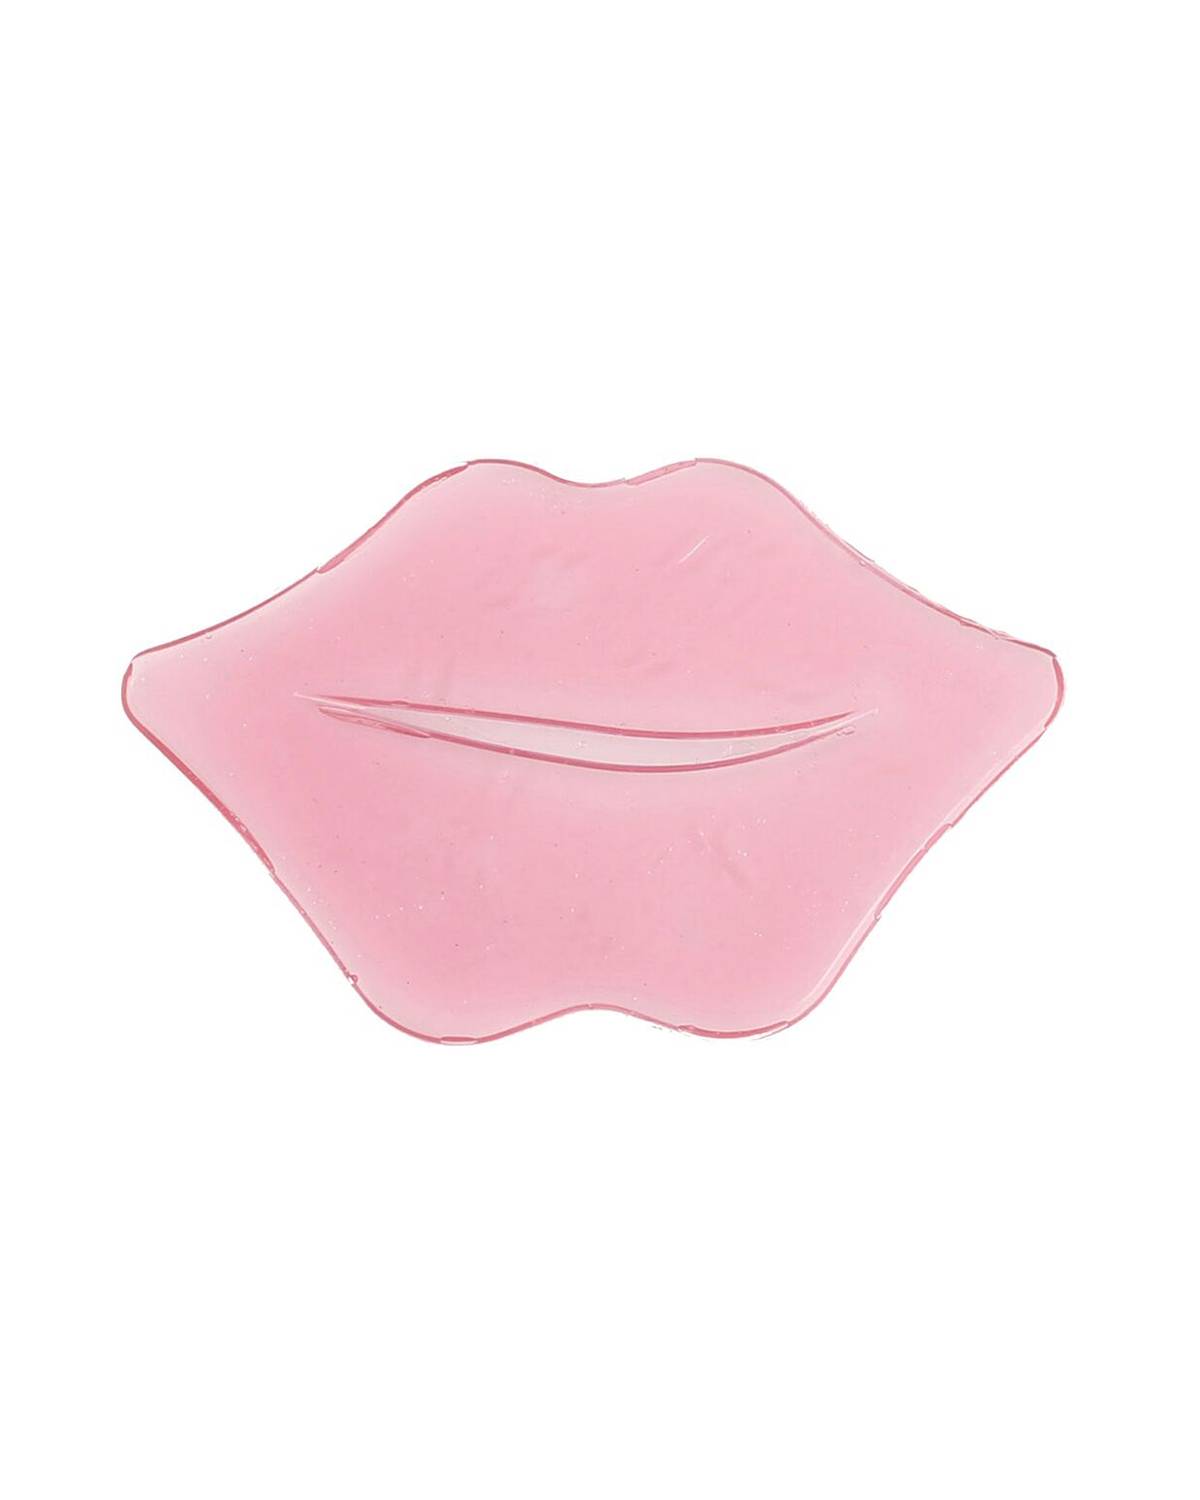 KNC Beauty Lip Masks gift guide image